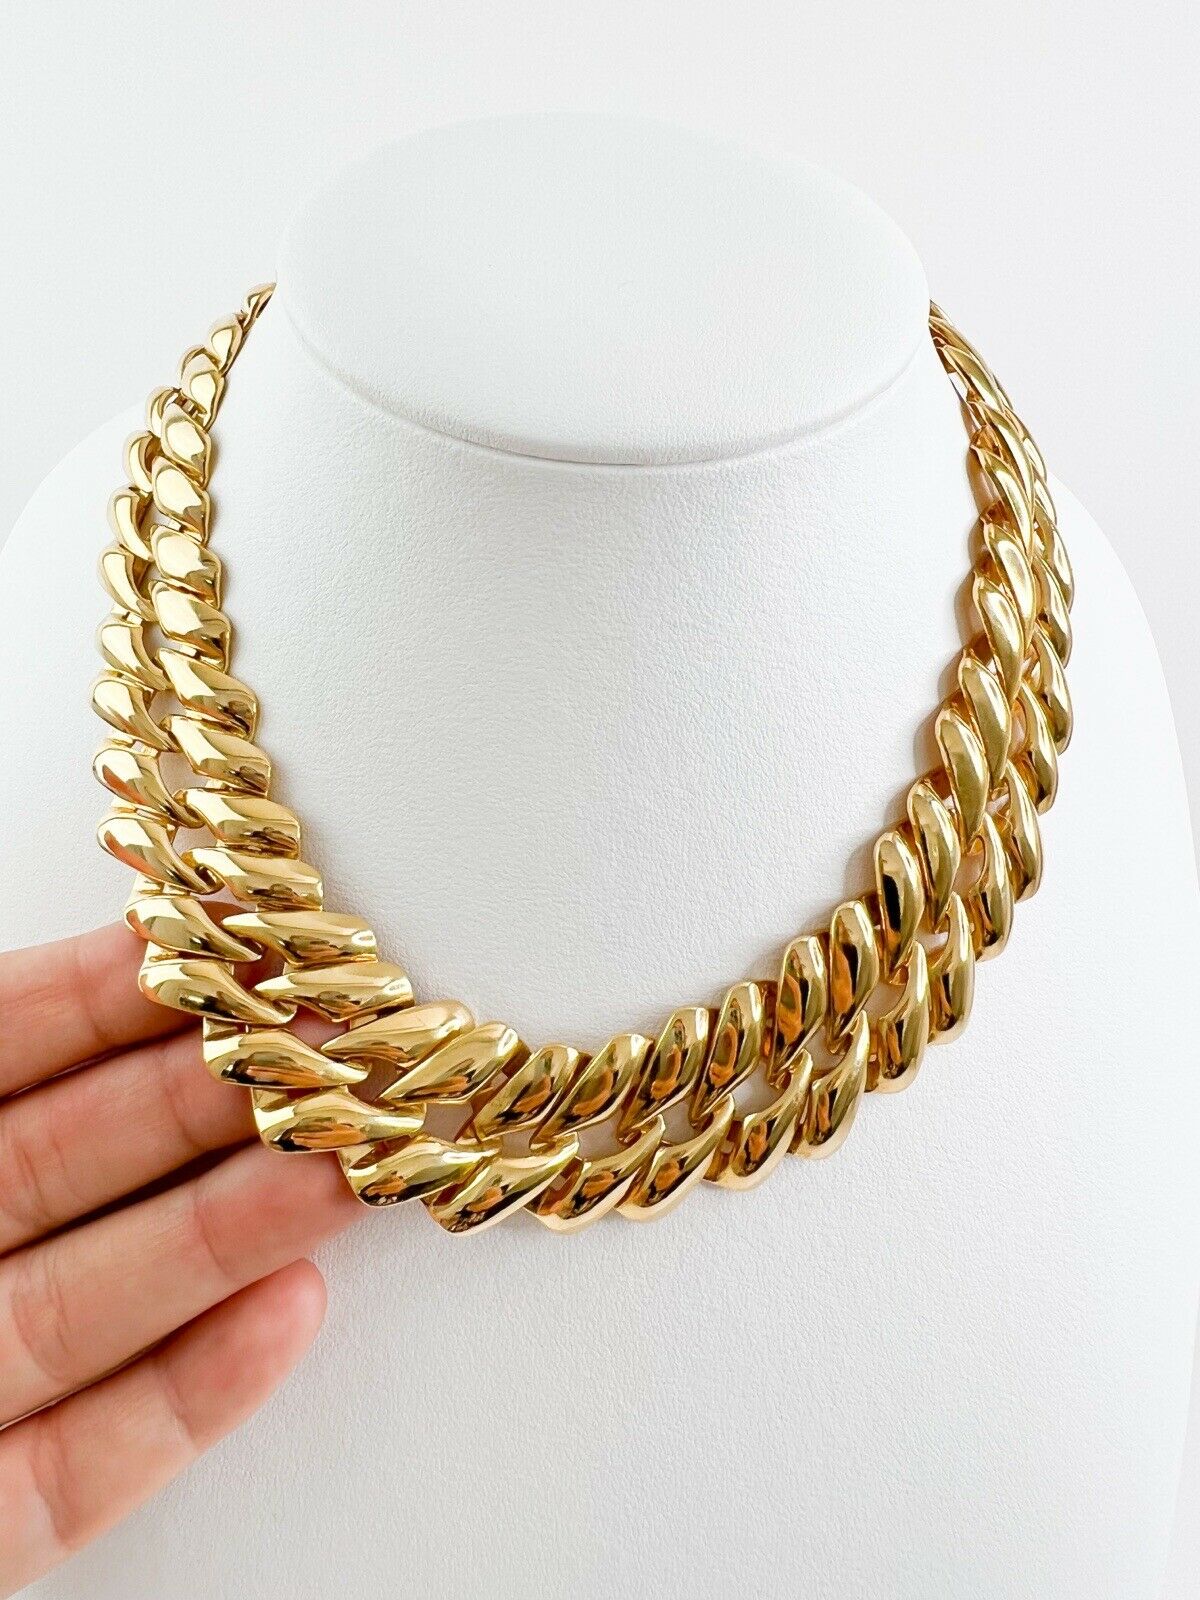 Yuki Torii Vintage Necklace Chunky Chain Choker Gold